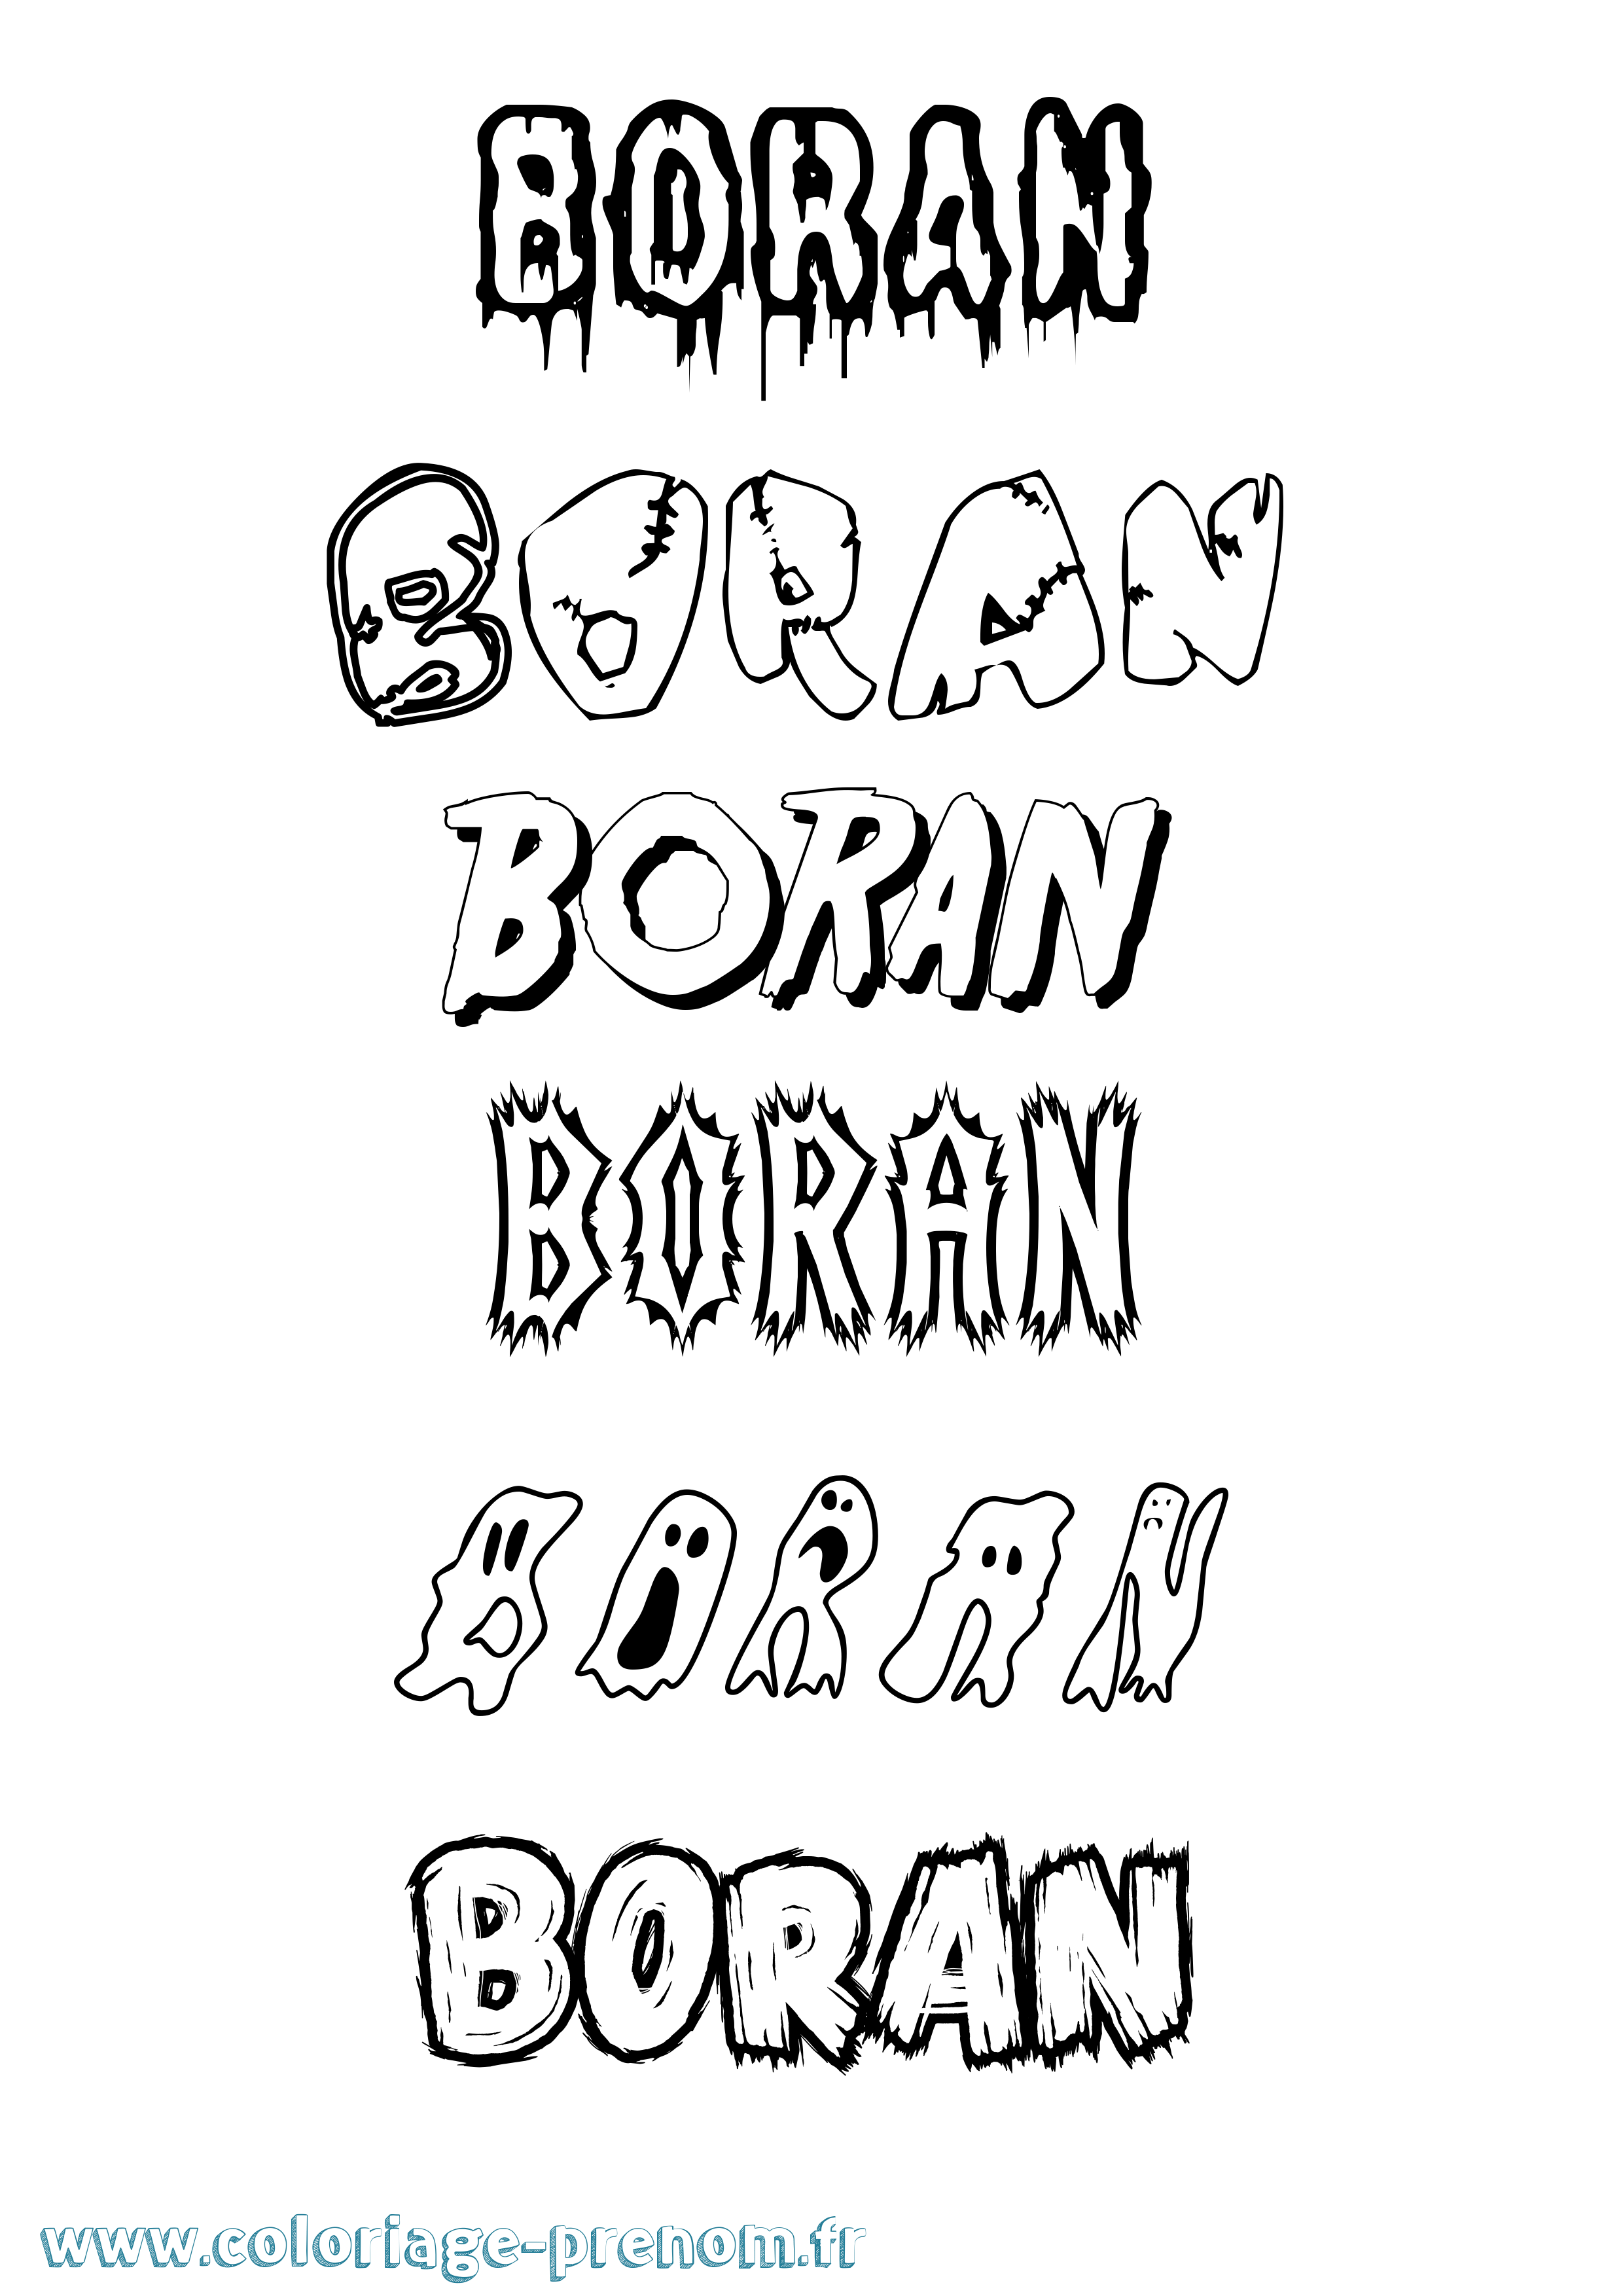 Coloriage prénom Boran Frisson